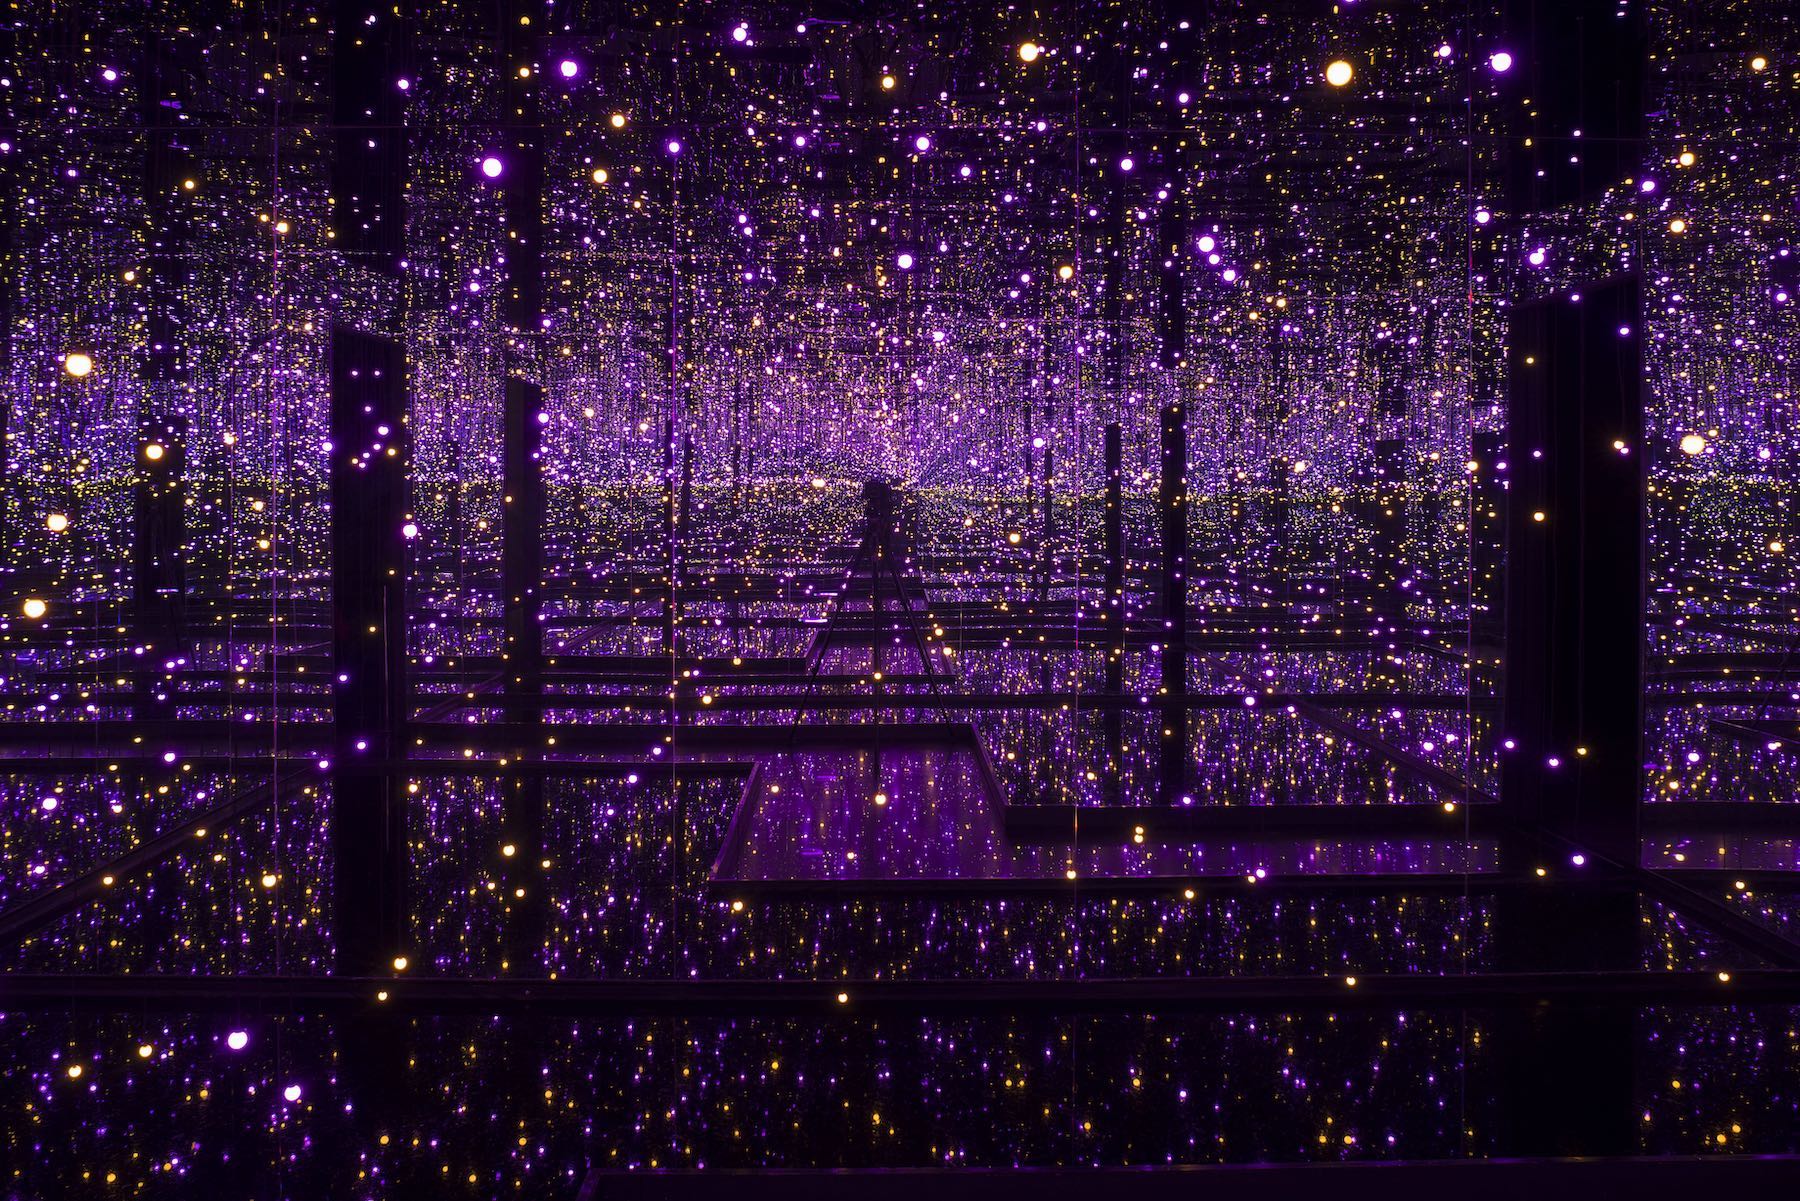 Yayoi Kusama Infinity Mirrored Room - Filled with the Brilliance of Life (Végtelen tükörszoba – Az élet nagyszerűségével teli) 2011/2017 Tate Presented by the artist, Ota Fine Arts and Victoria Miro 2015, accessioned 2019 © YAYOI KUSAMA